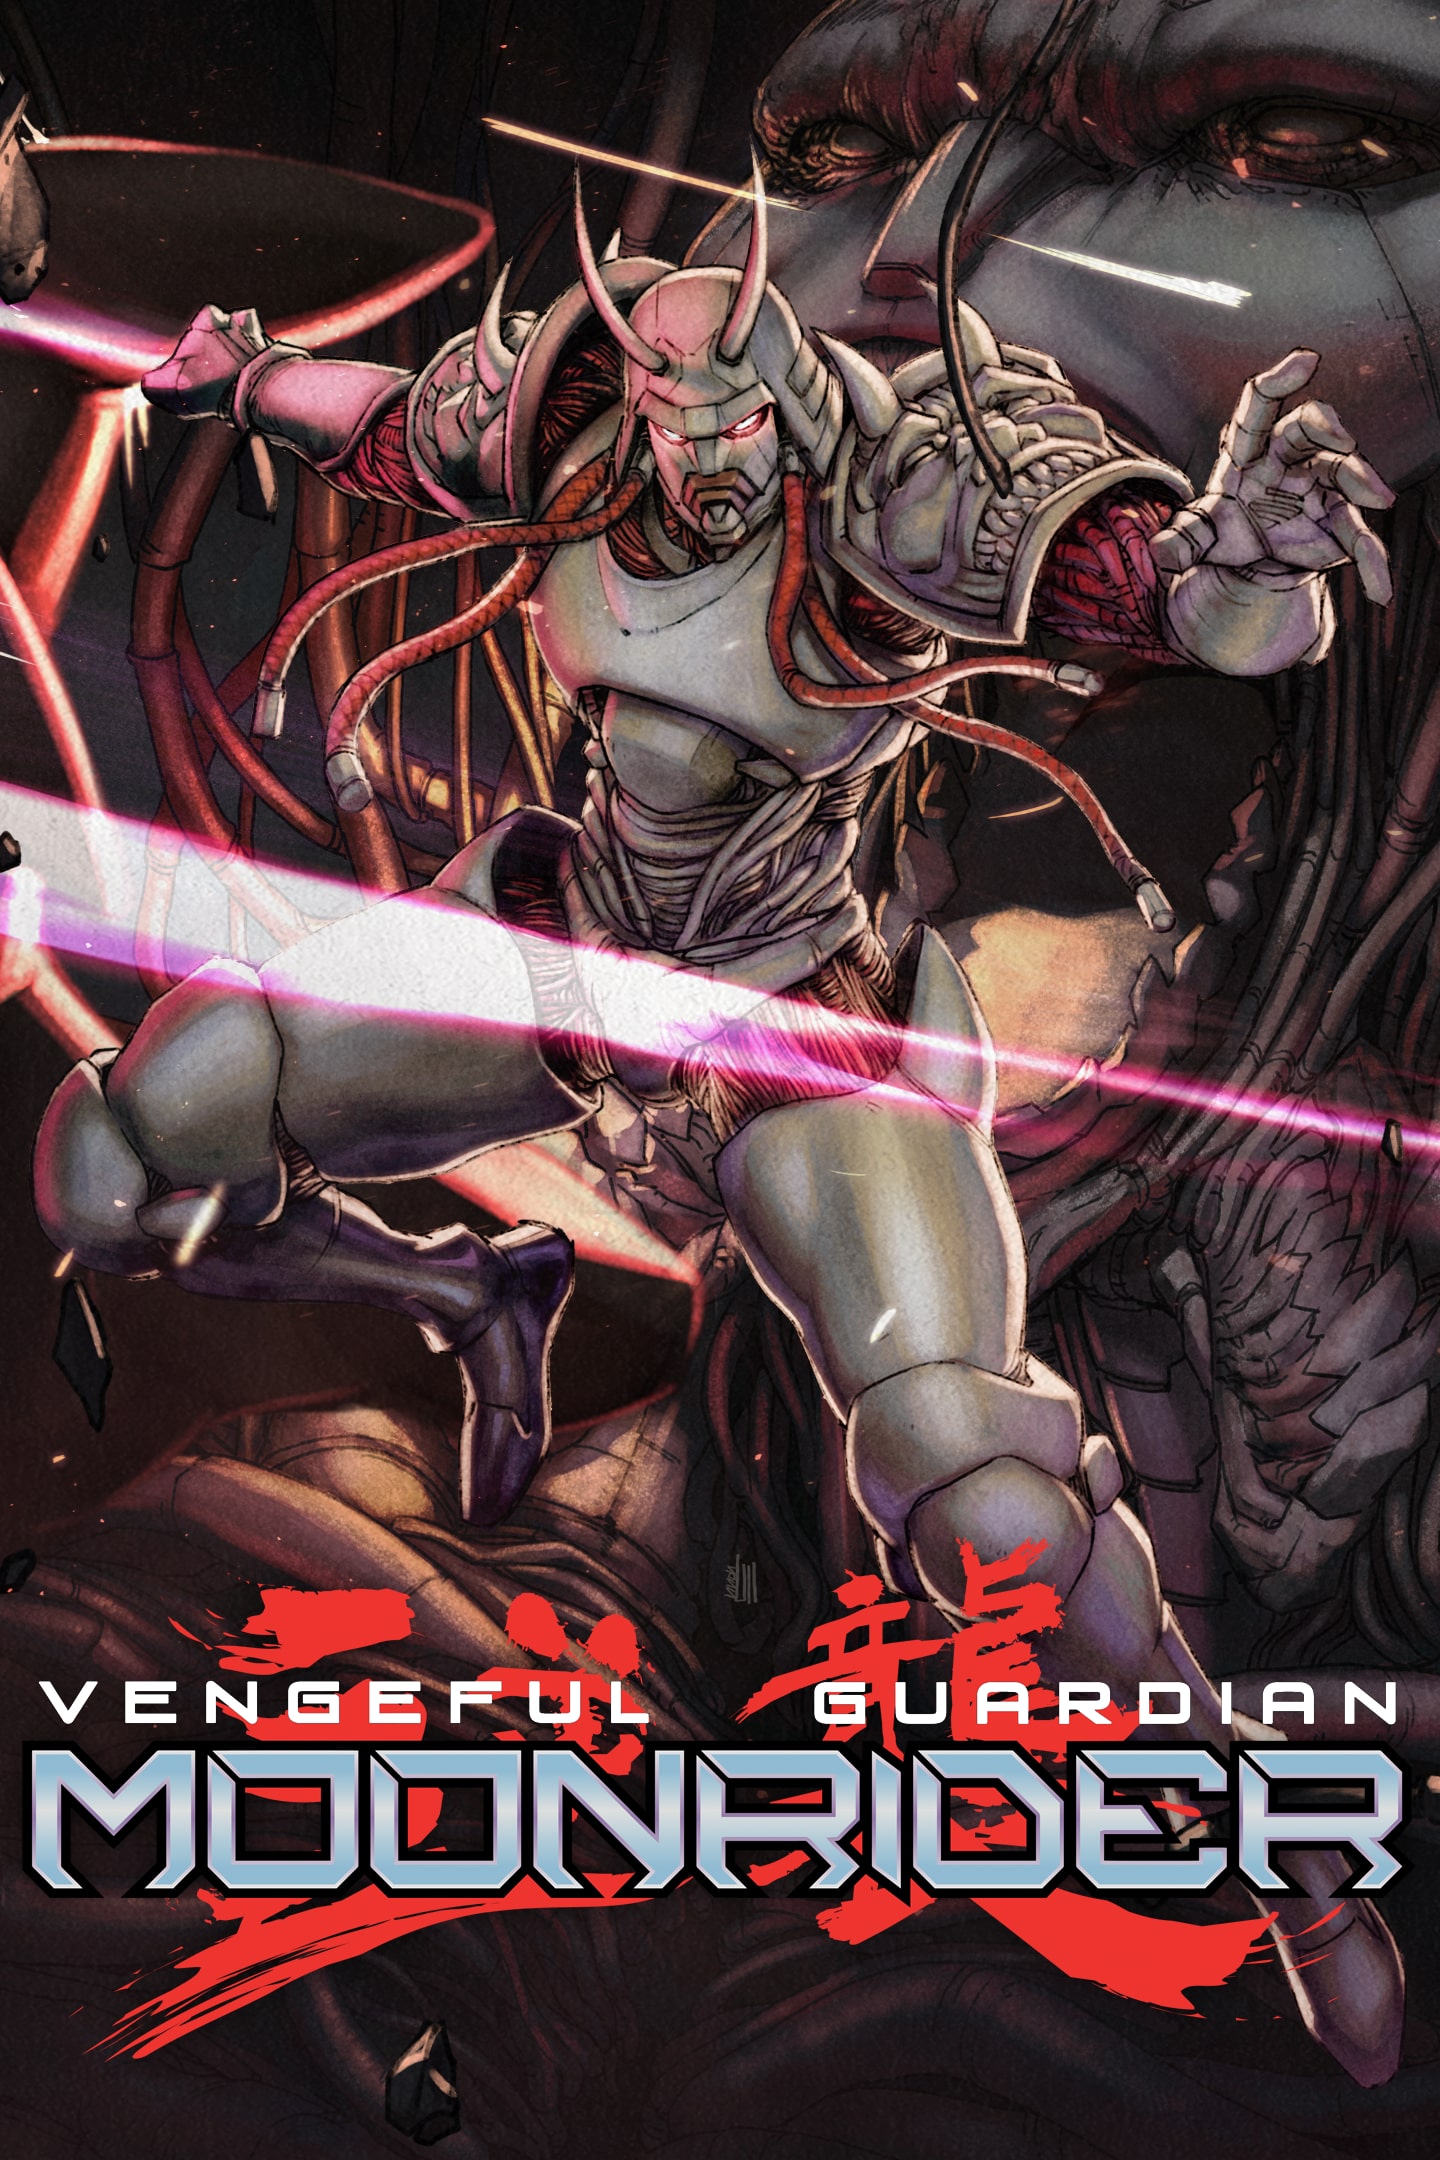 Vengeful Guardian: Moonrider (Switch)